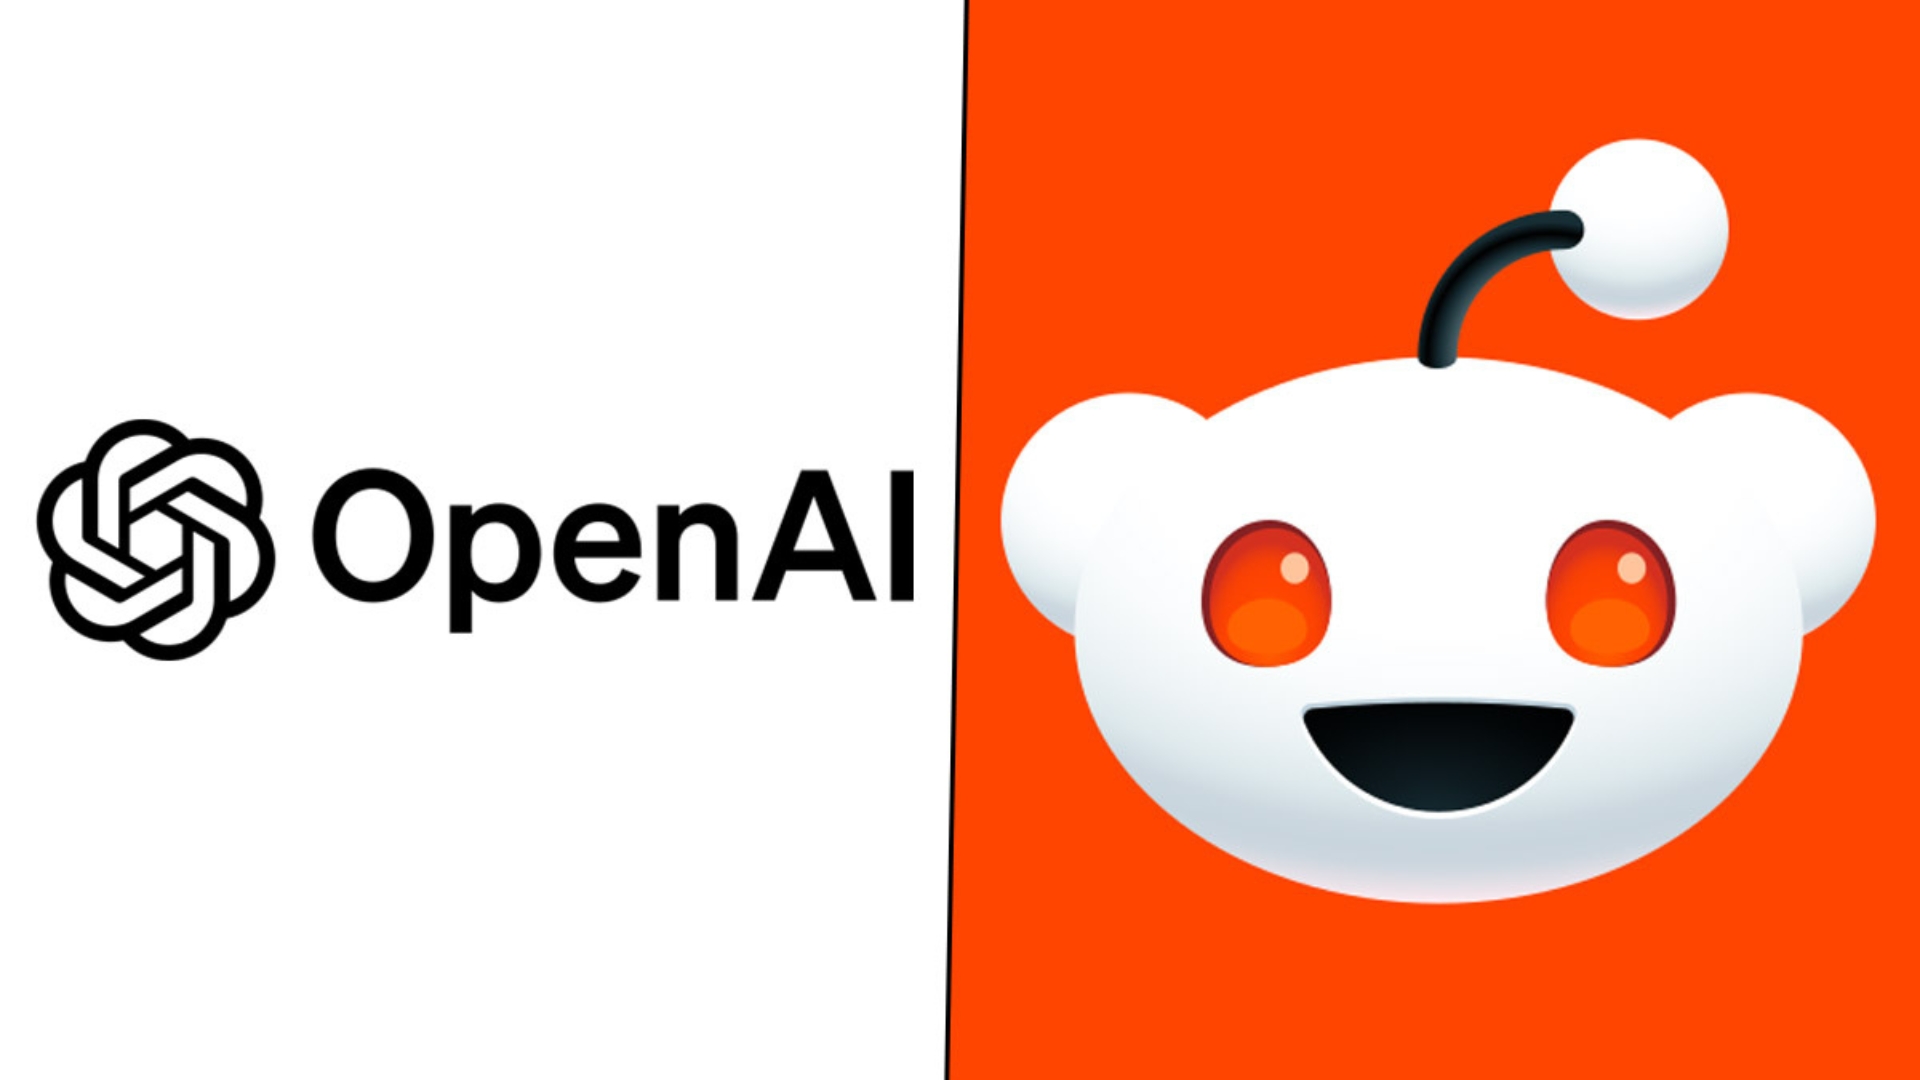 Reddit Shares Surge After OpenAI Deal